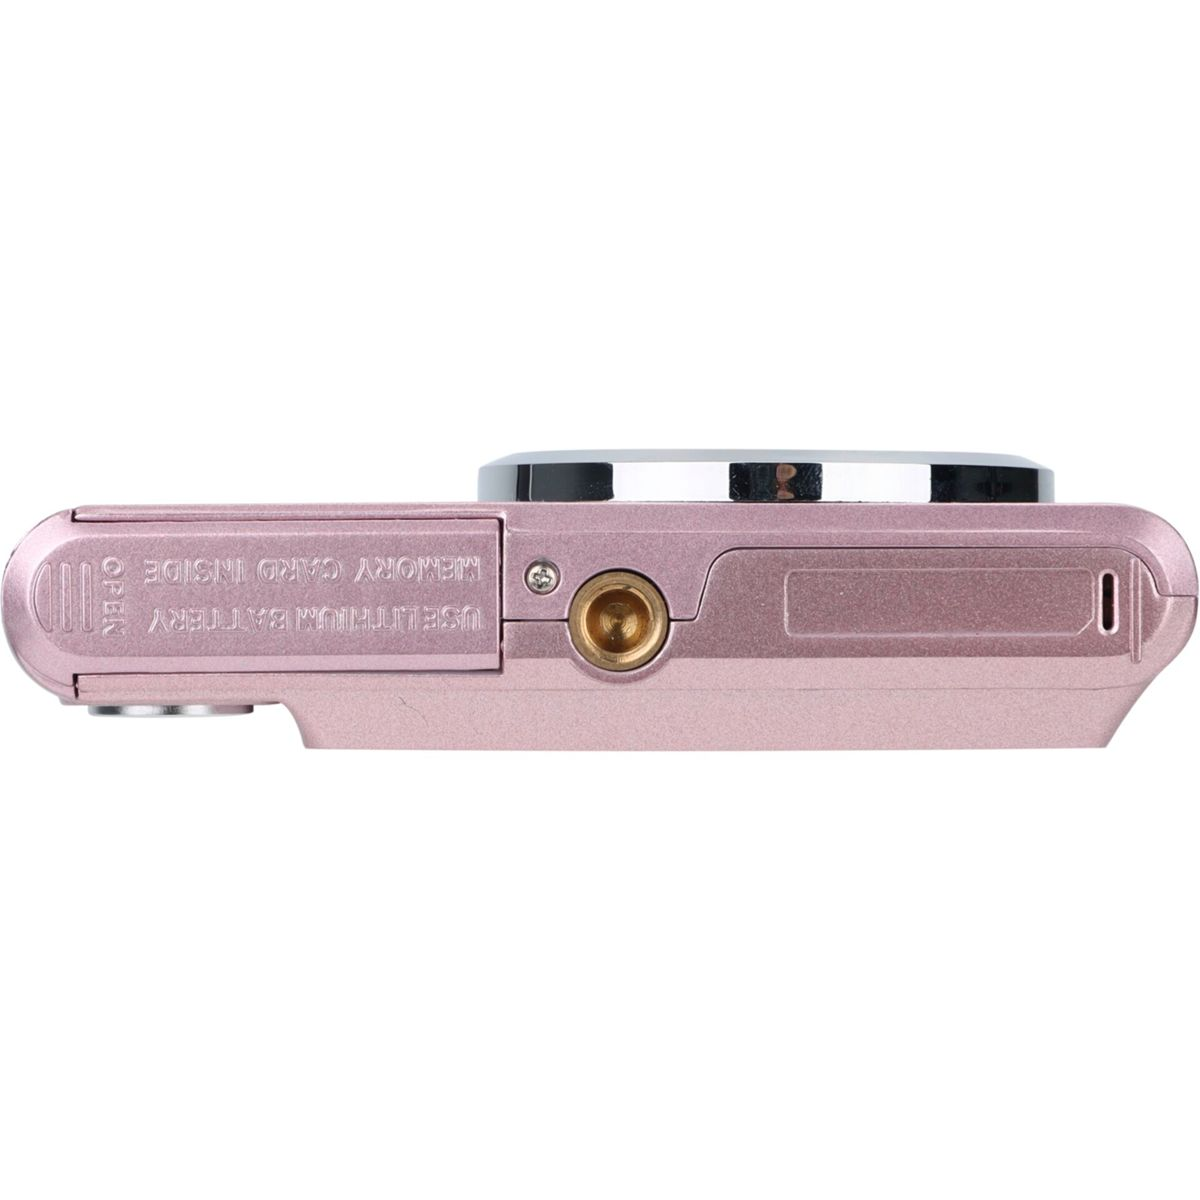 Digitalkamera pink DC5200 pink Cam Compact AGFAPHOTO